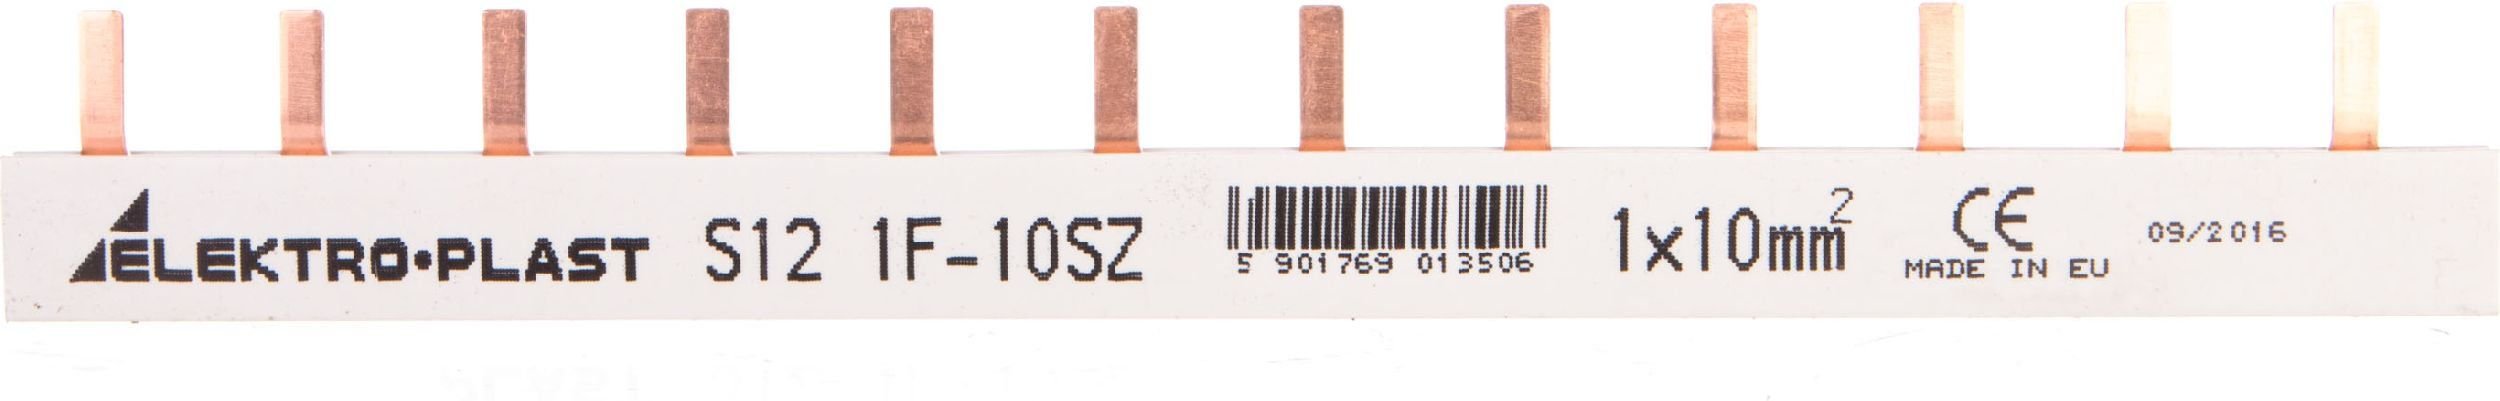 Conductor șină tip PIN 3P 16mm2 100A pini 12 IZS16 / 3F / 12 (45262)